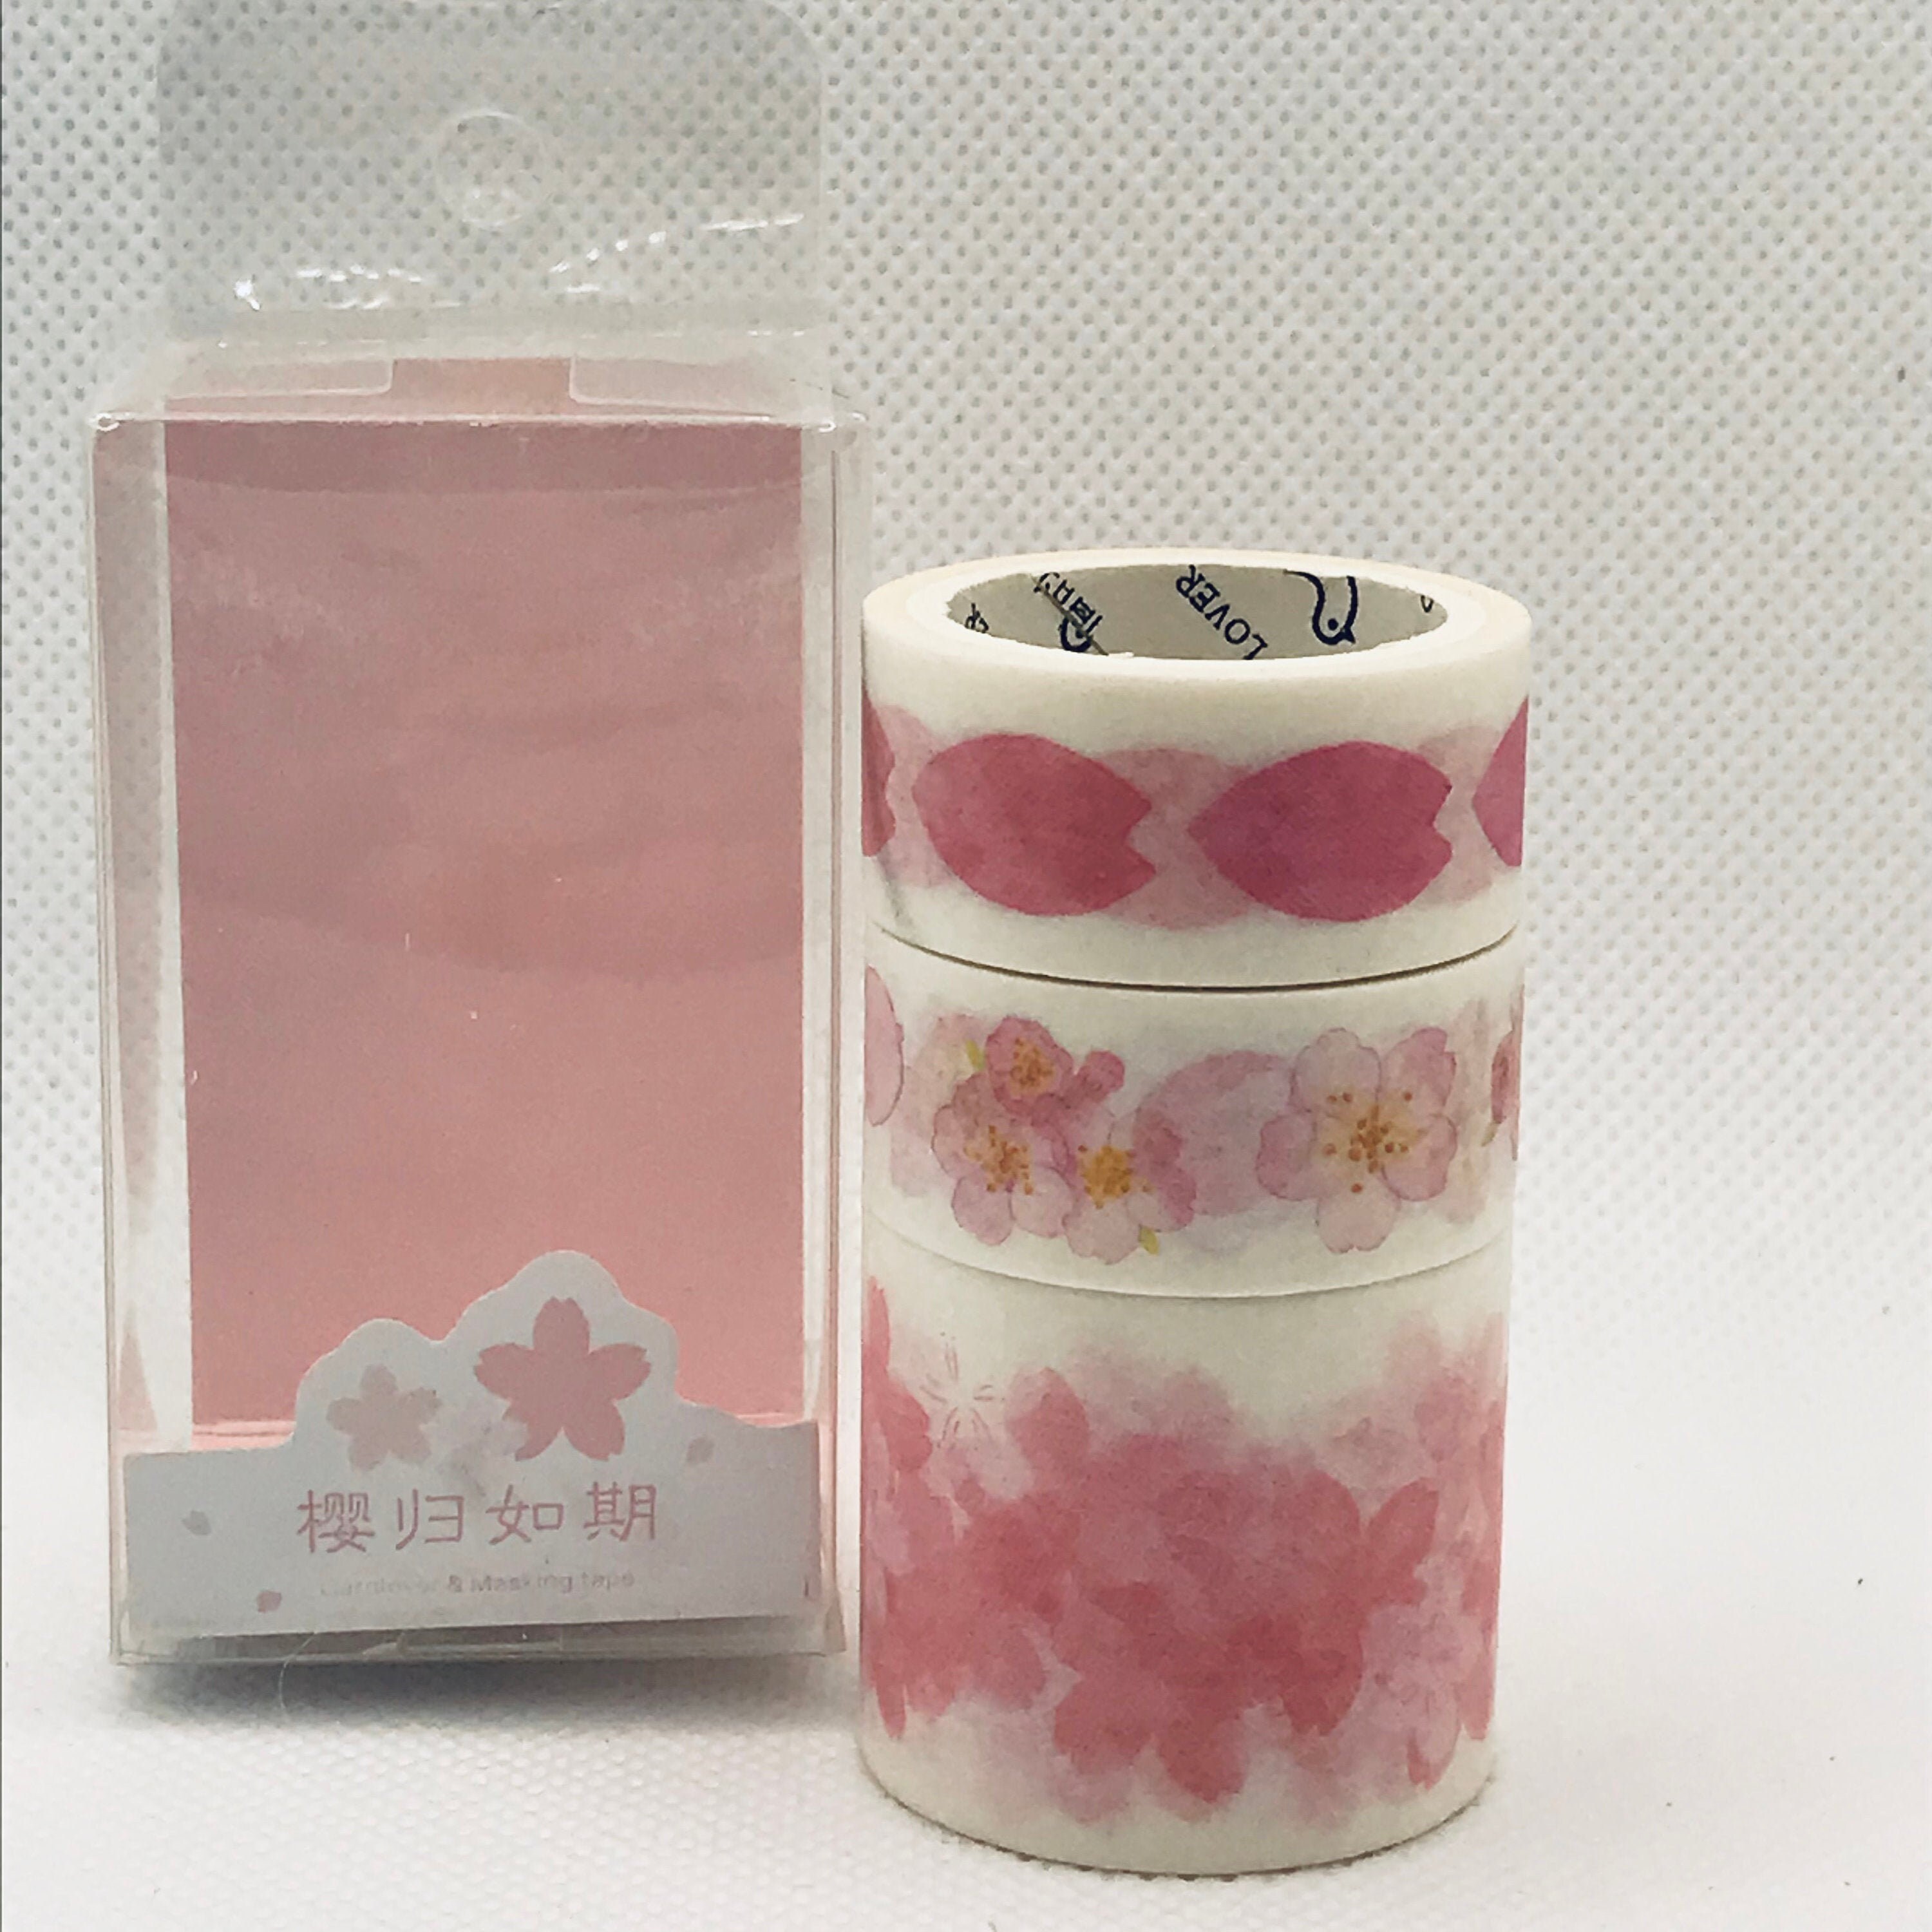 2pcs/lot Cute Washi Tape Set Japanese Paper Planner Masking Tape